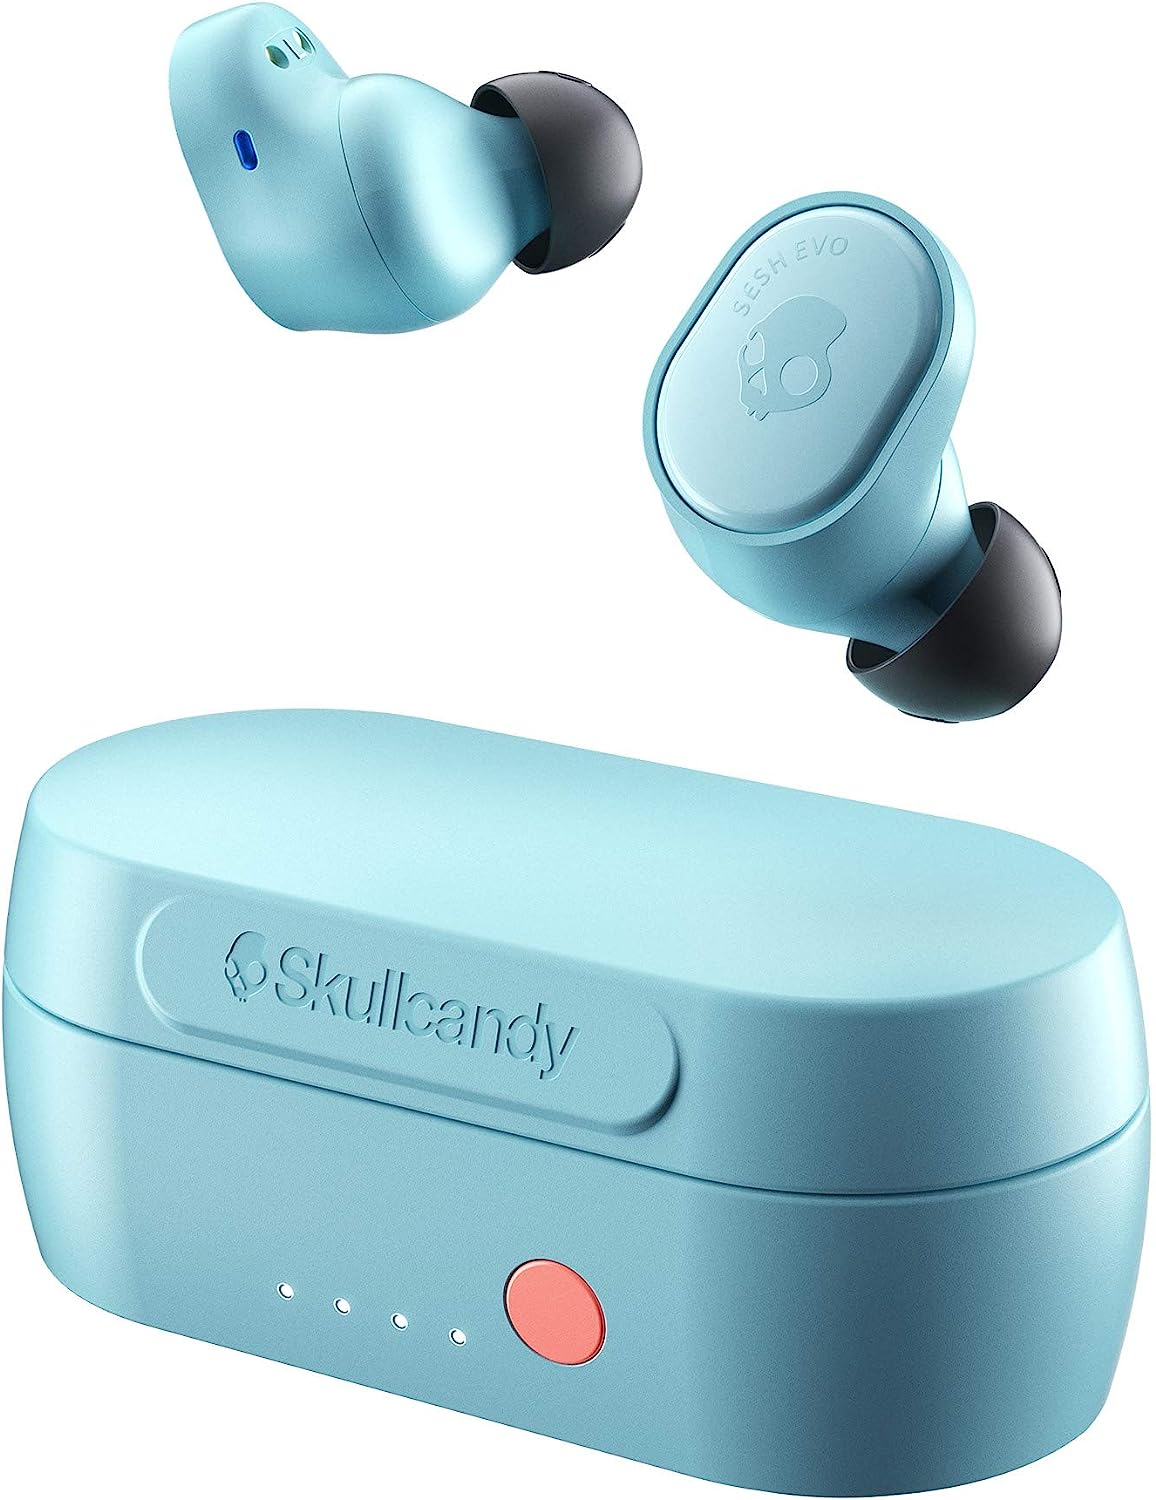 Skullcandy Sesh Evo True Wireless Earbuds - Blue - New